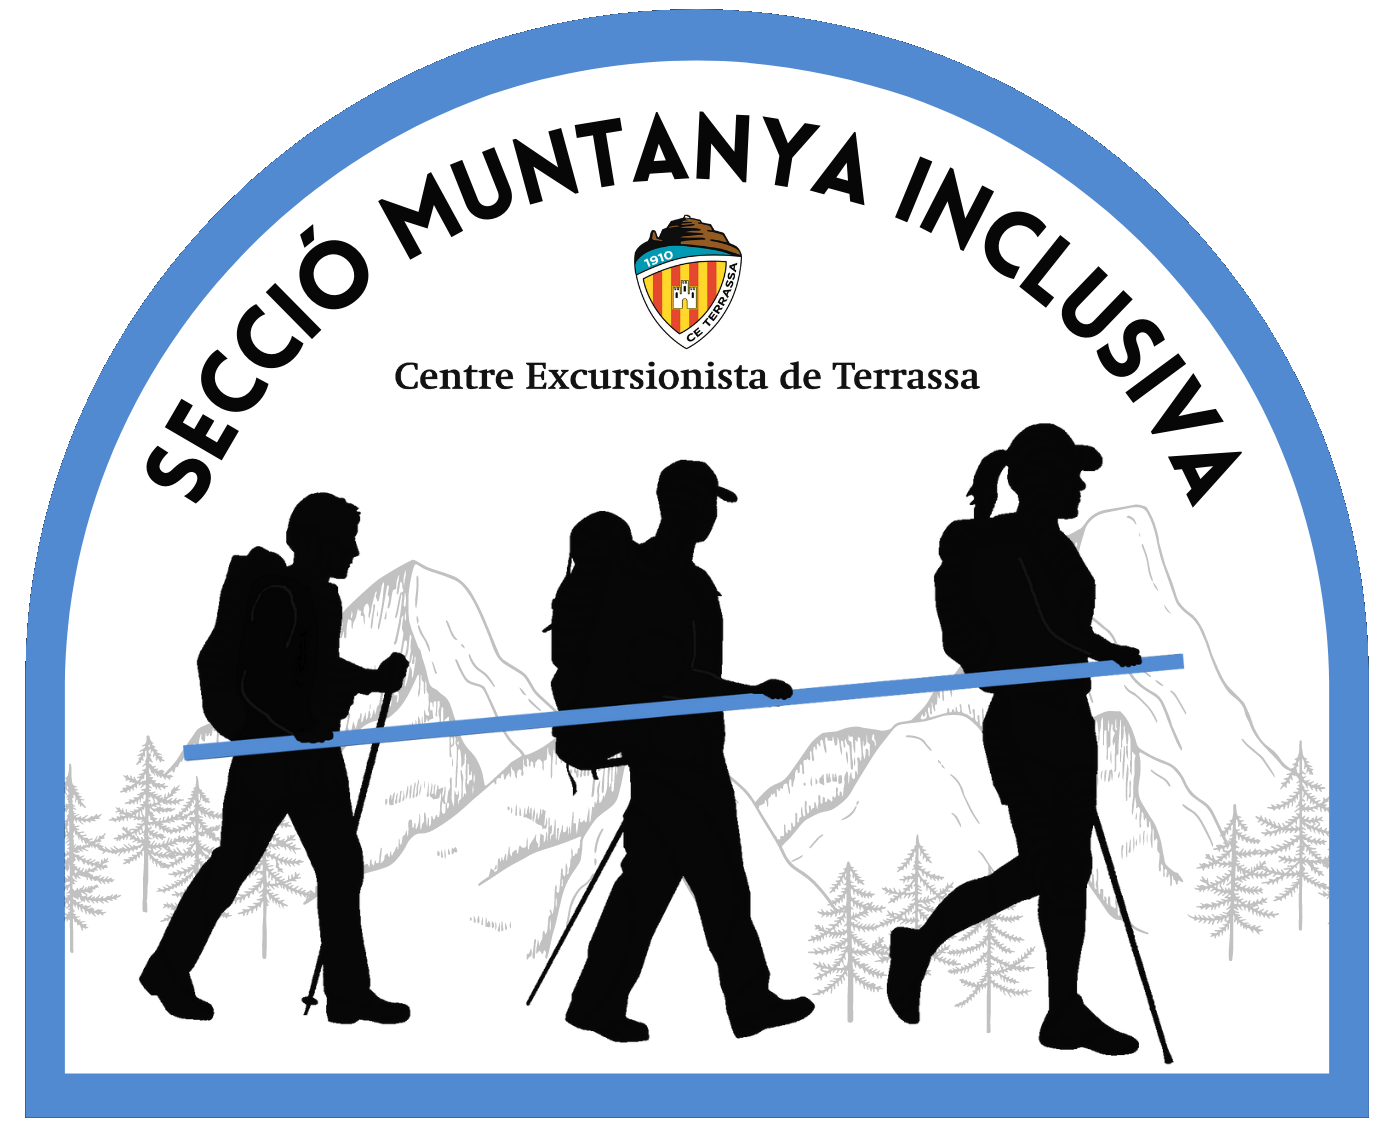 https://www.ce-terrassa.cat/media/activitats/Muntanya_inclusiva/LOGO_SECCIO_MUNTANYA_INCLUSIVA.png - Centre Excursionista de Terrassa